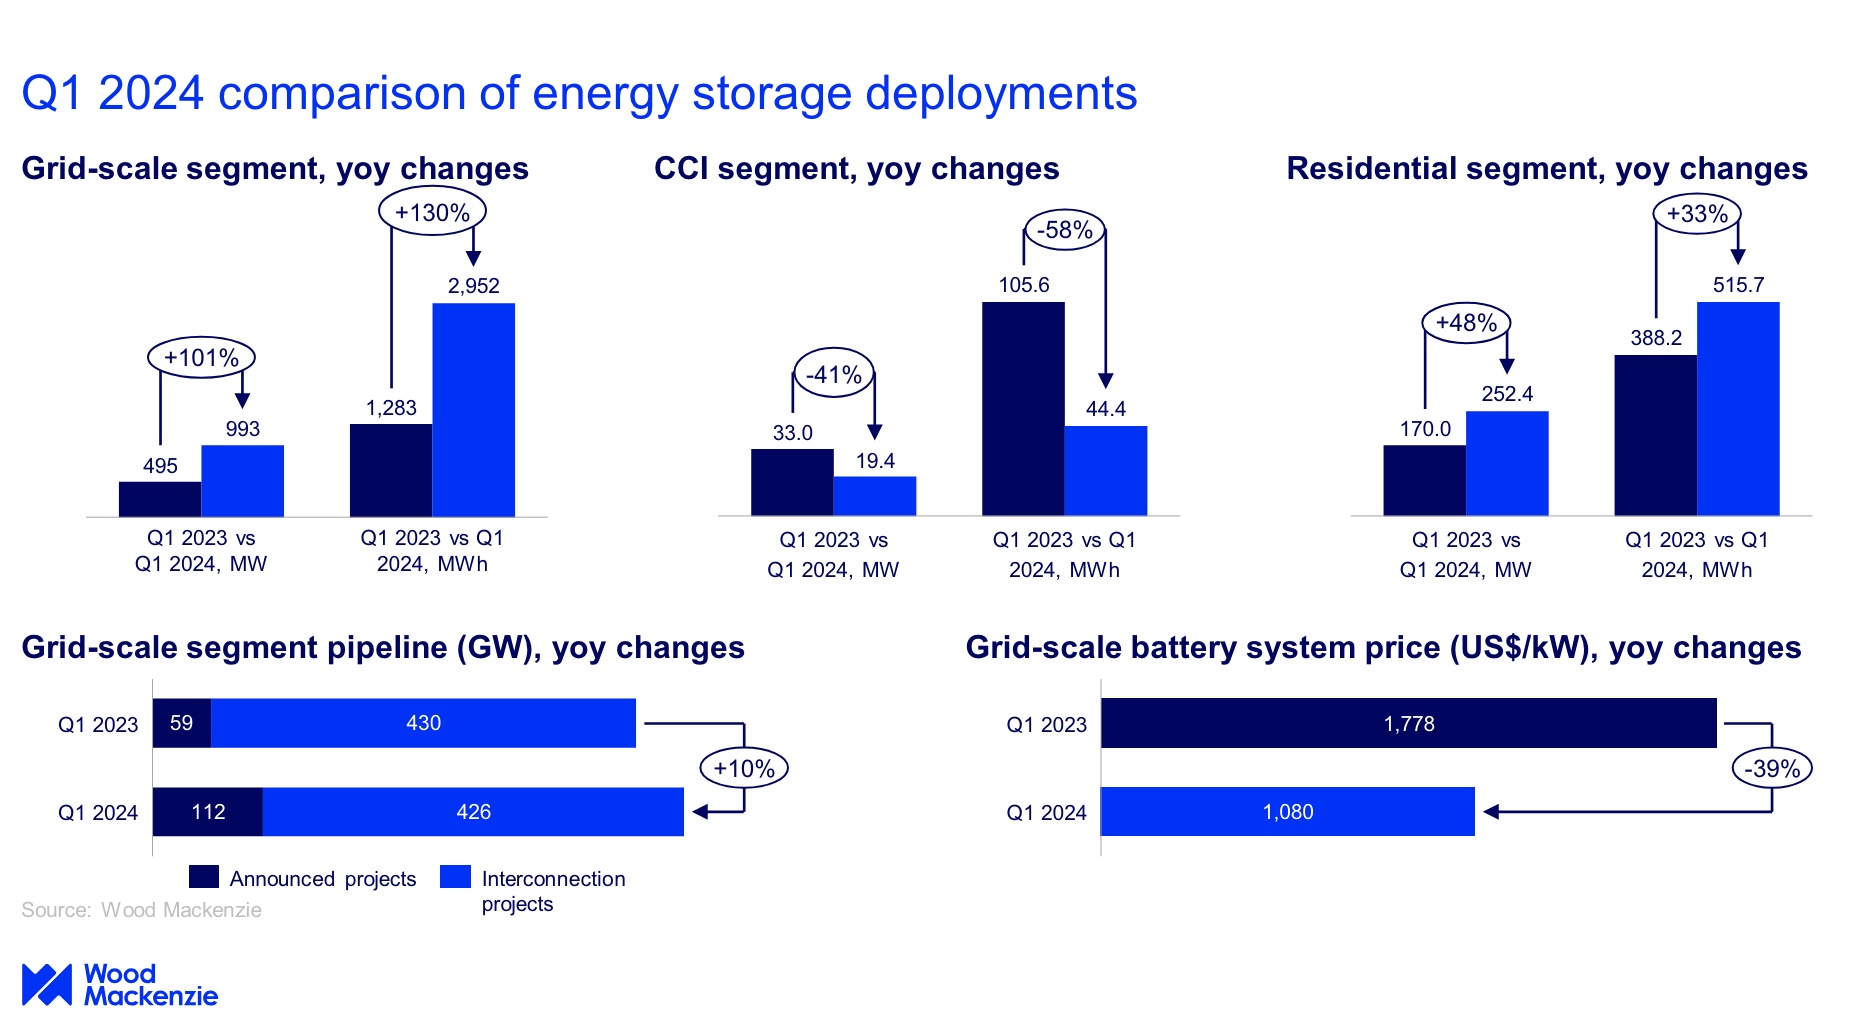 Energy storage deployments